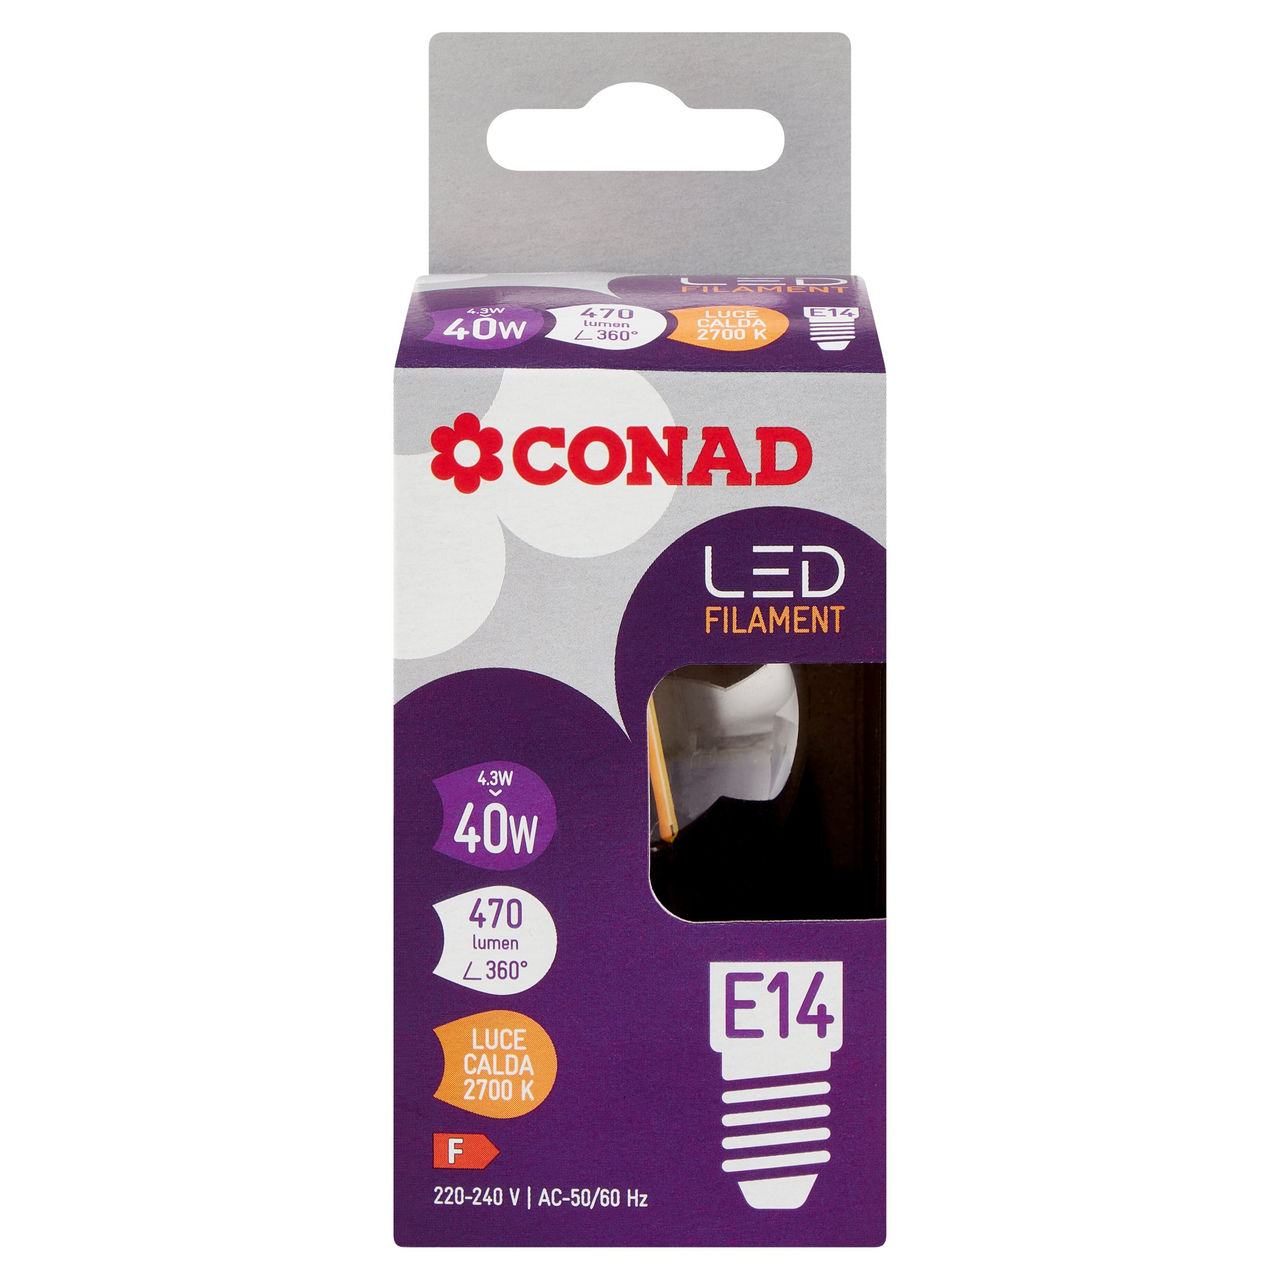 CONAD Led Filament 4.3W 470 Lumen E14 Luce Calda